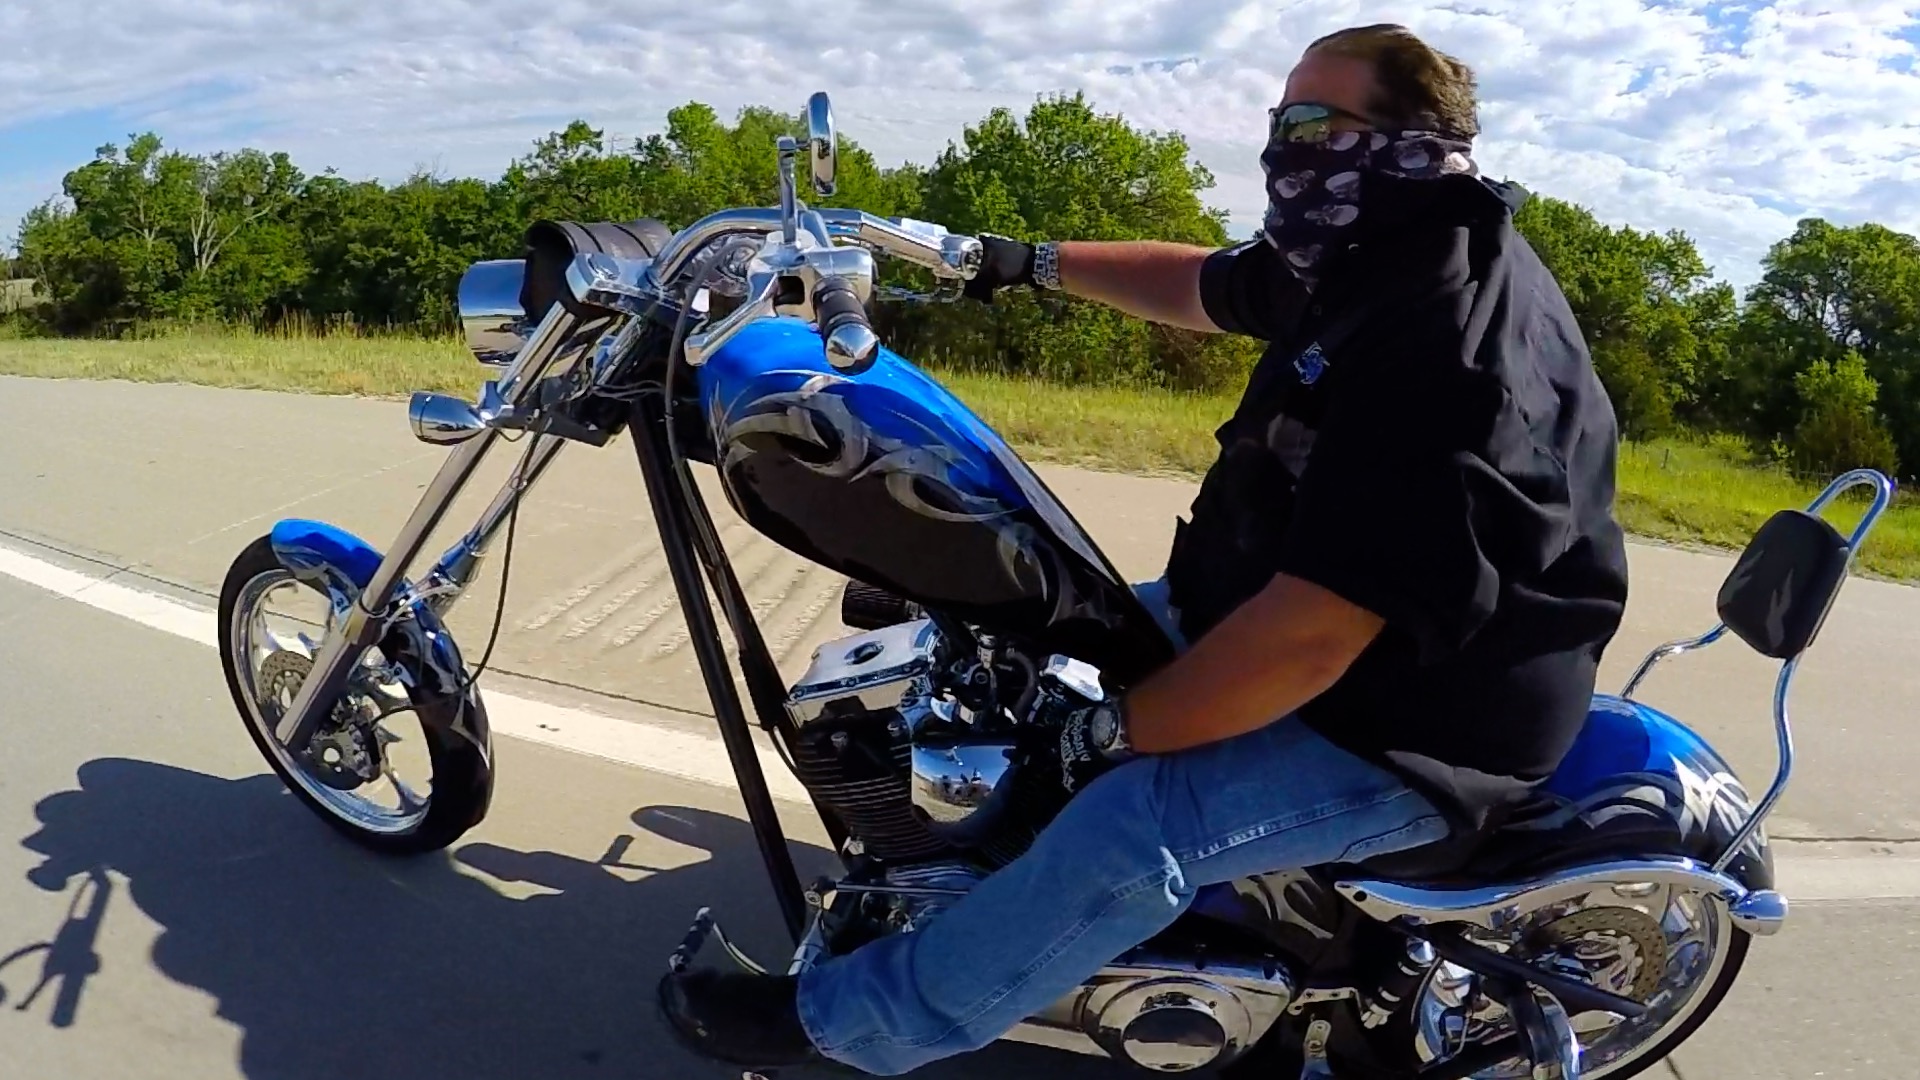 Riding motorcycles at the Big Dog Biker Reunion